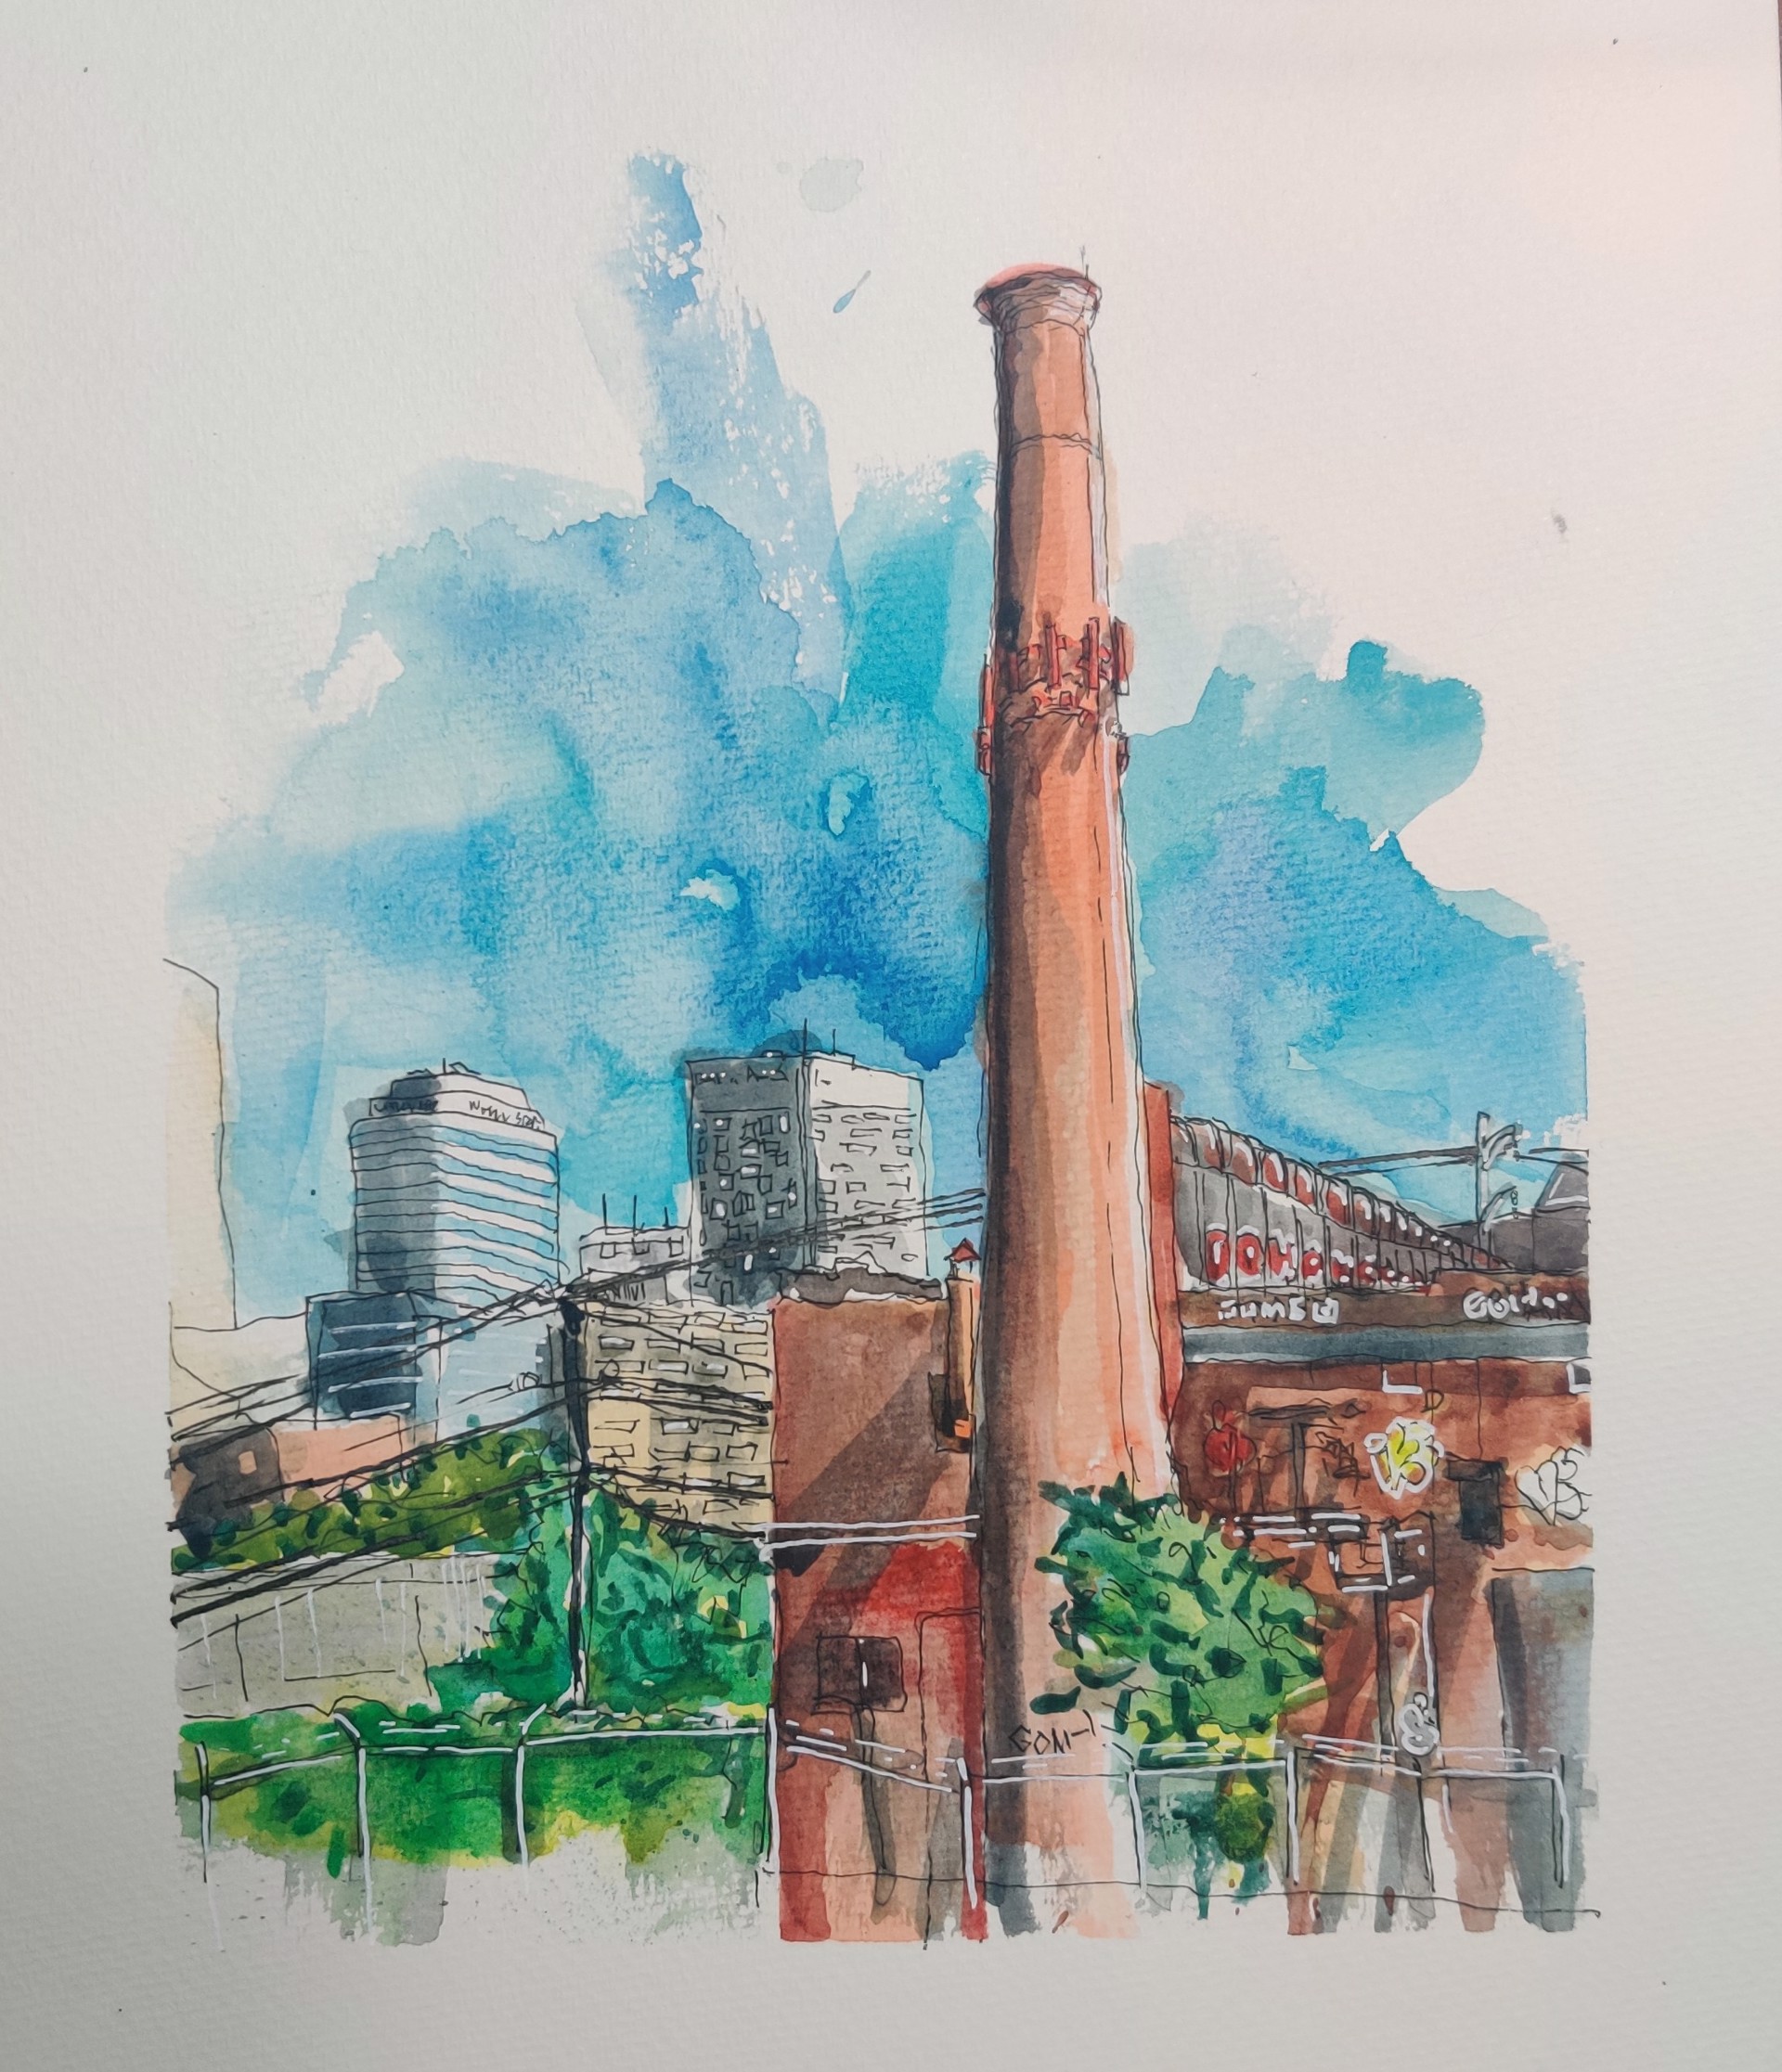 Smokestack behind City View Lofts by Nathaniel Gutierrez